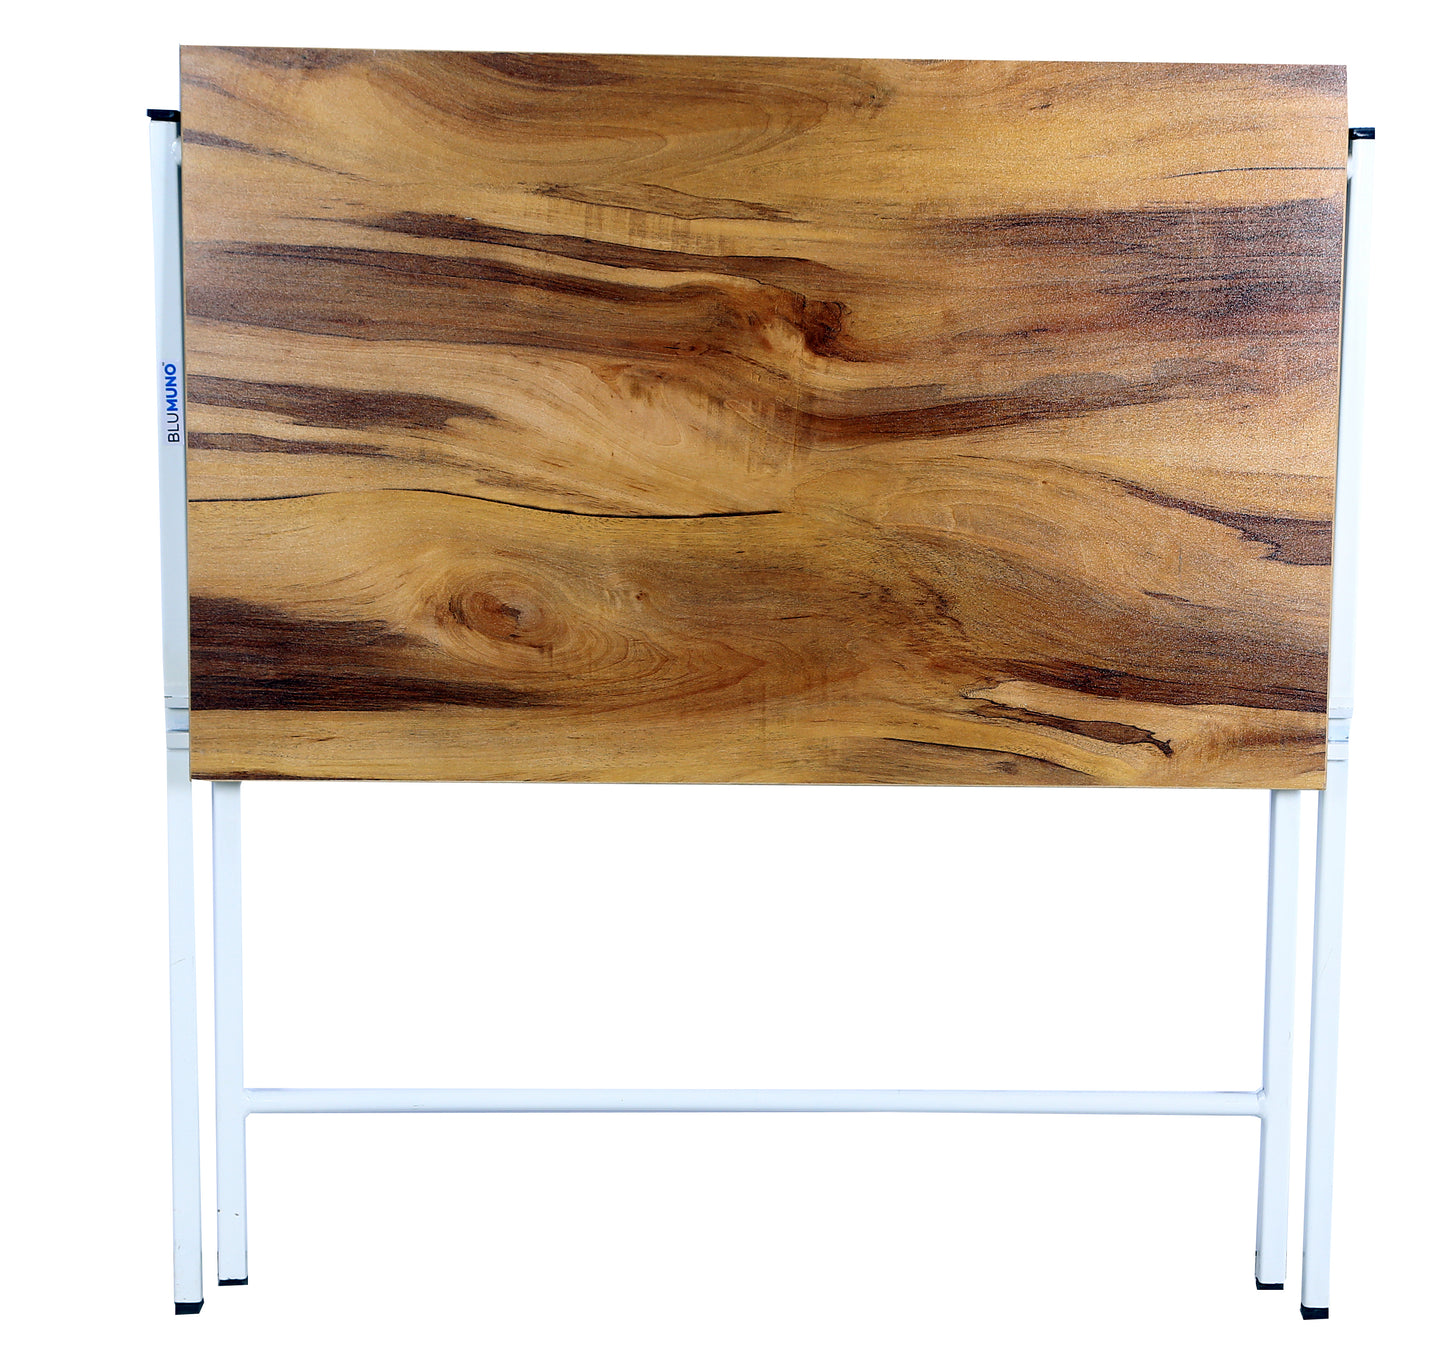 Blumuno X-Plus Multi-purpose Table (Posh Wooden Finish)